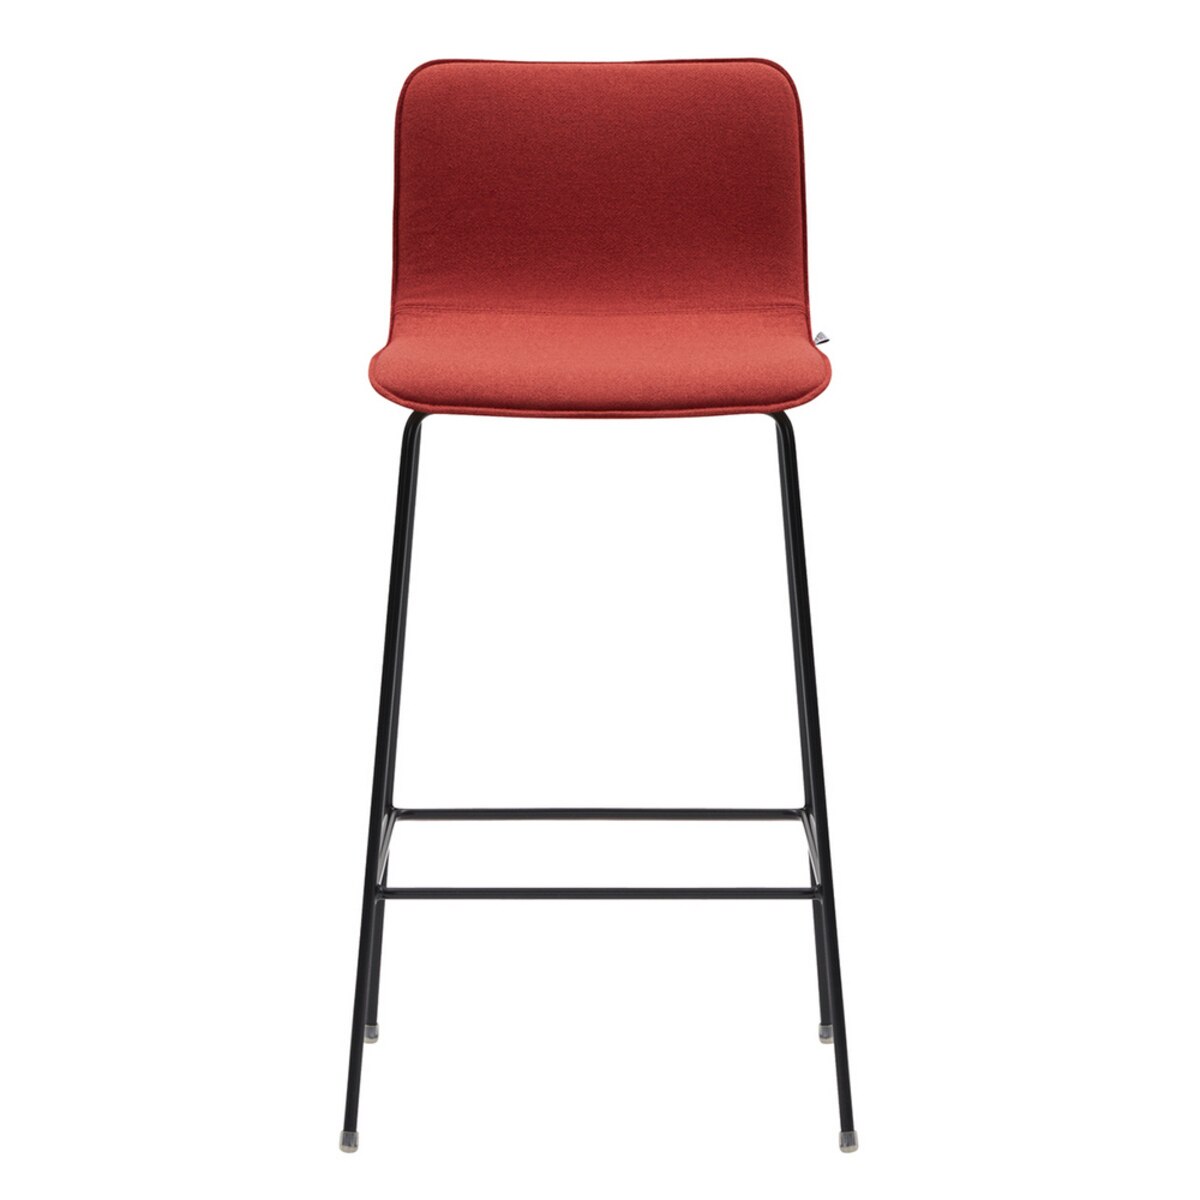 Sidiz M17 高腳椅 紅色